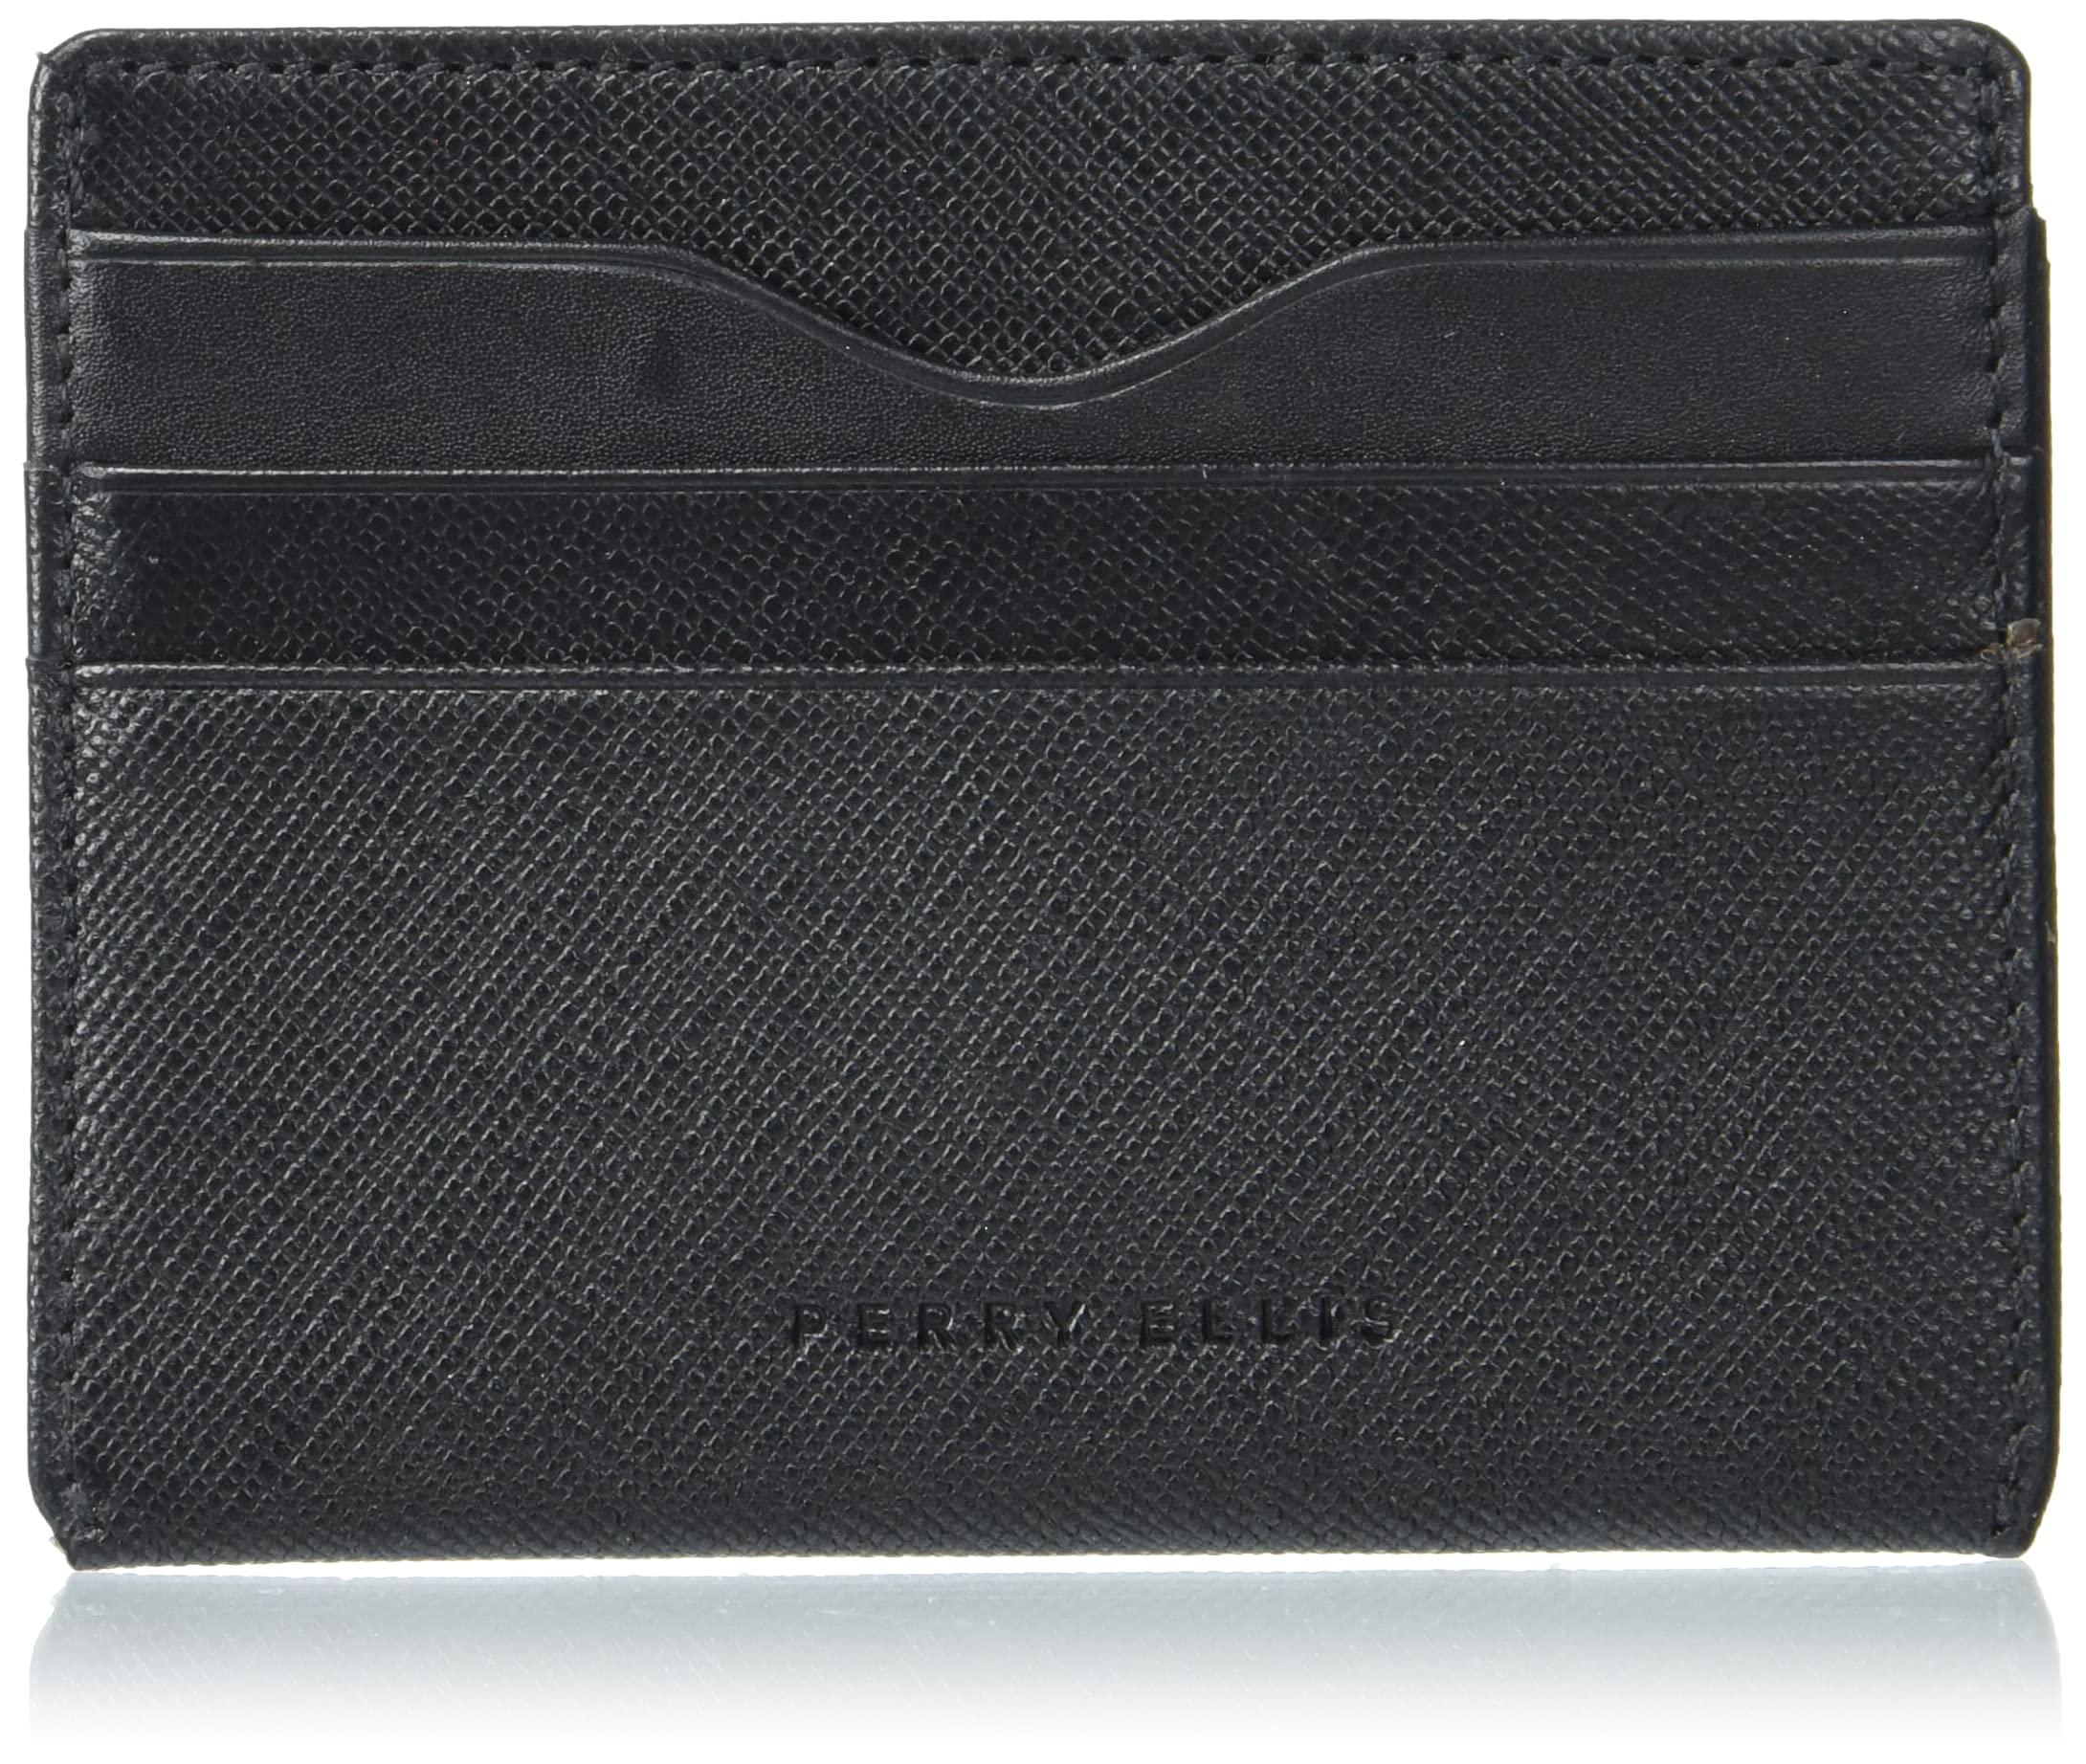 Perry Ellis Men's Portfolio Card Case Id Wallet, Blk, One Size